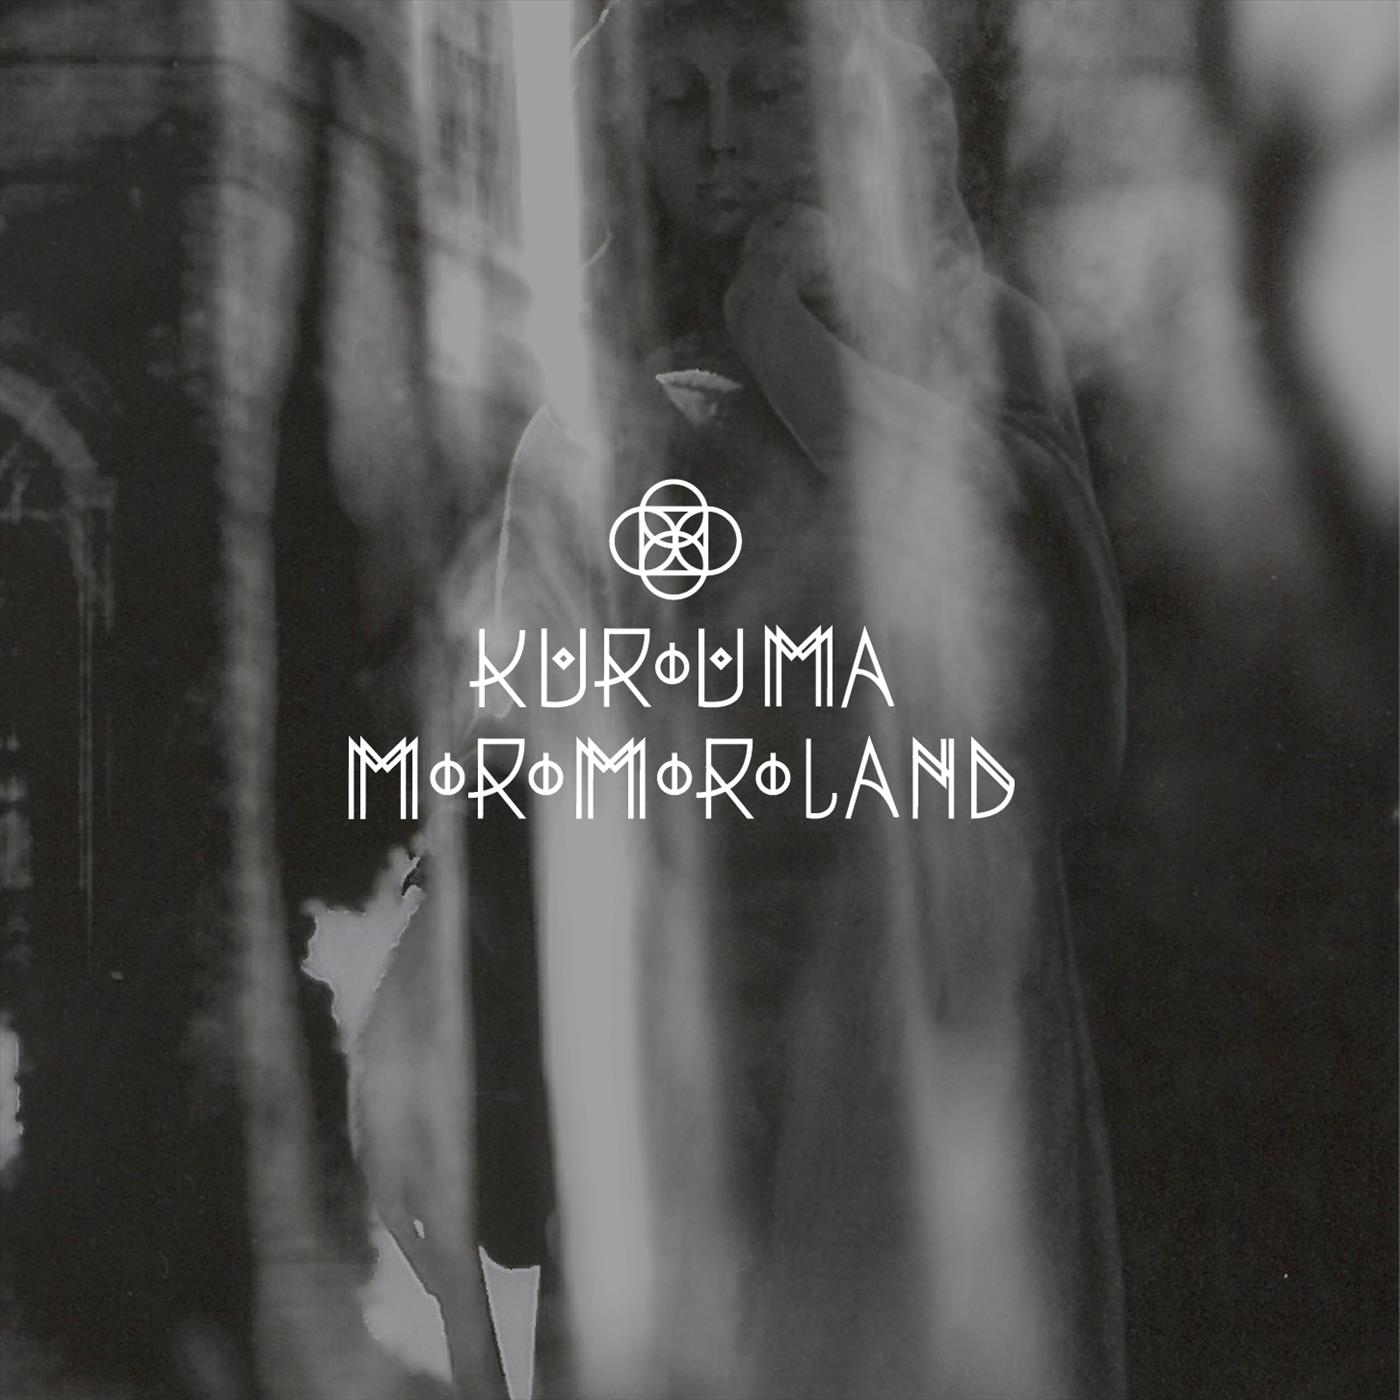 Kurouma / Moro Moro Land Split